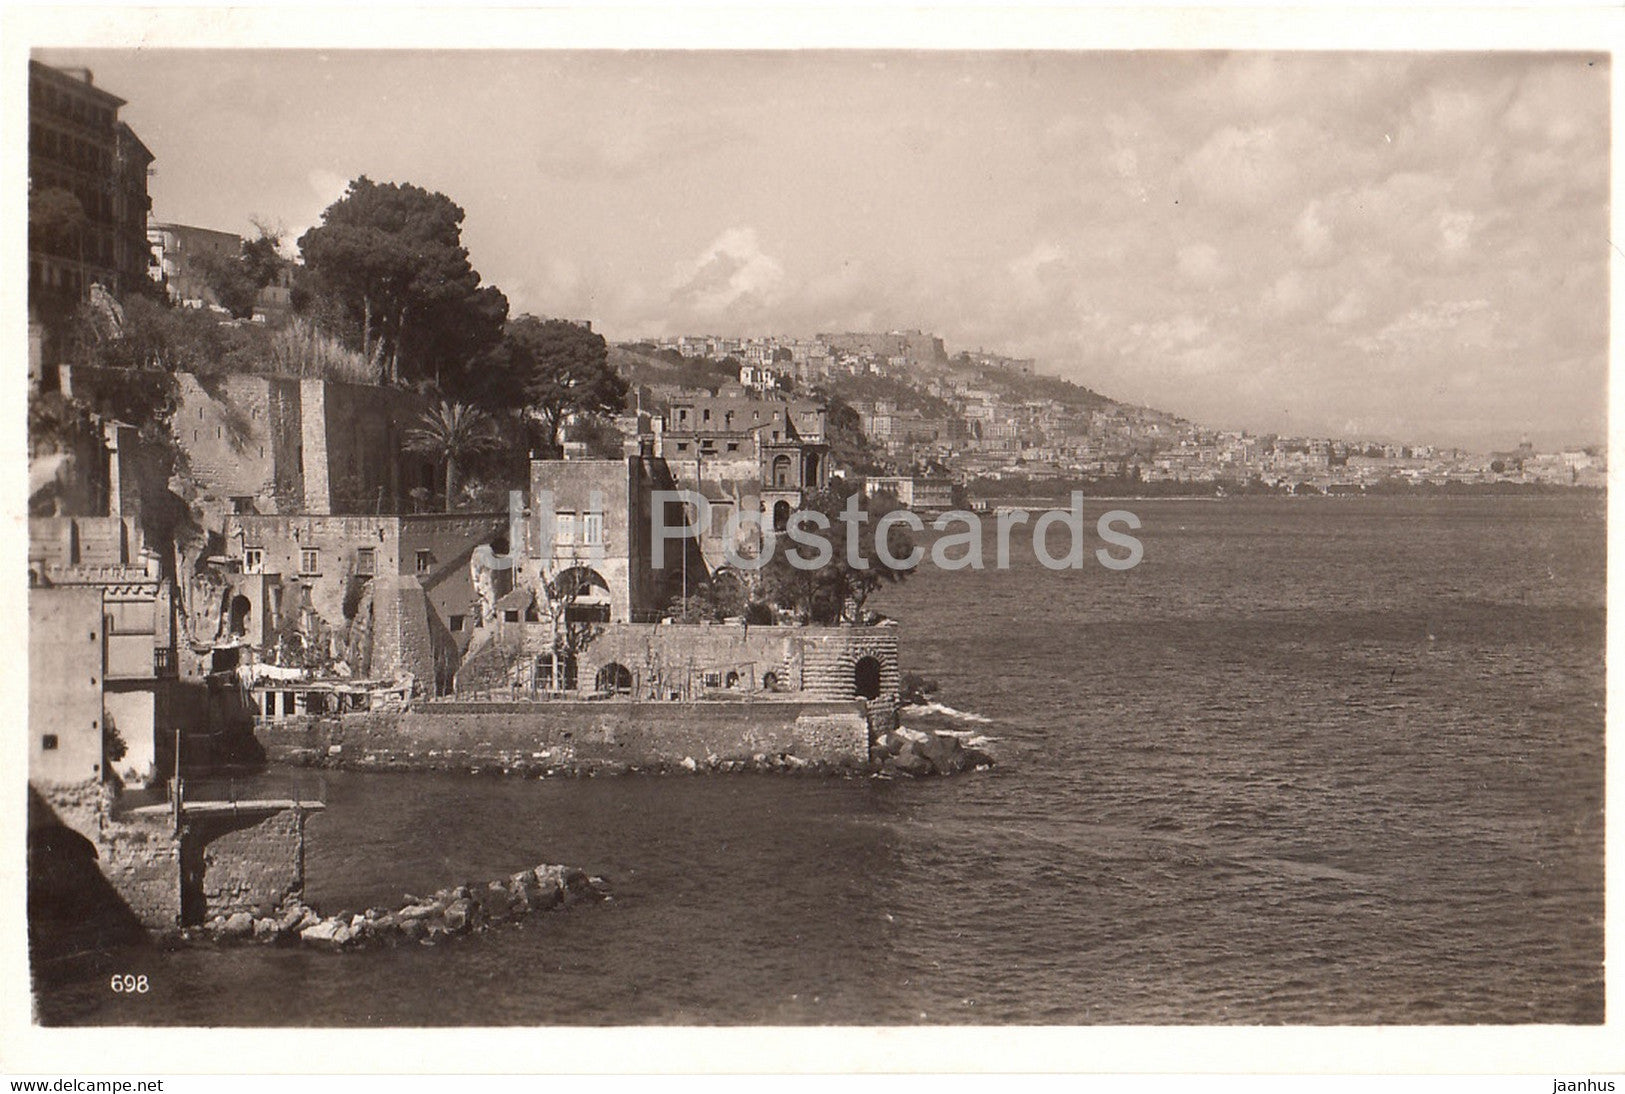 Golfo fi Napoli - Bay of Naples - 698 - old postcard - Italy - unused - JH Postcards